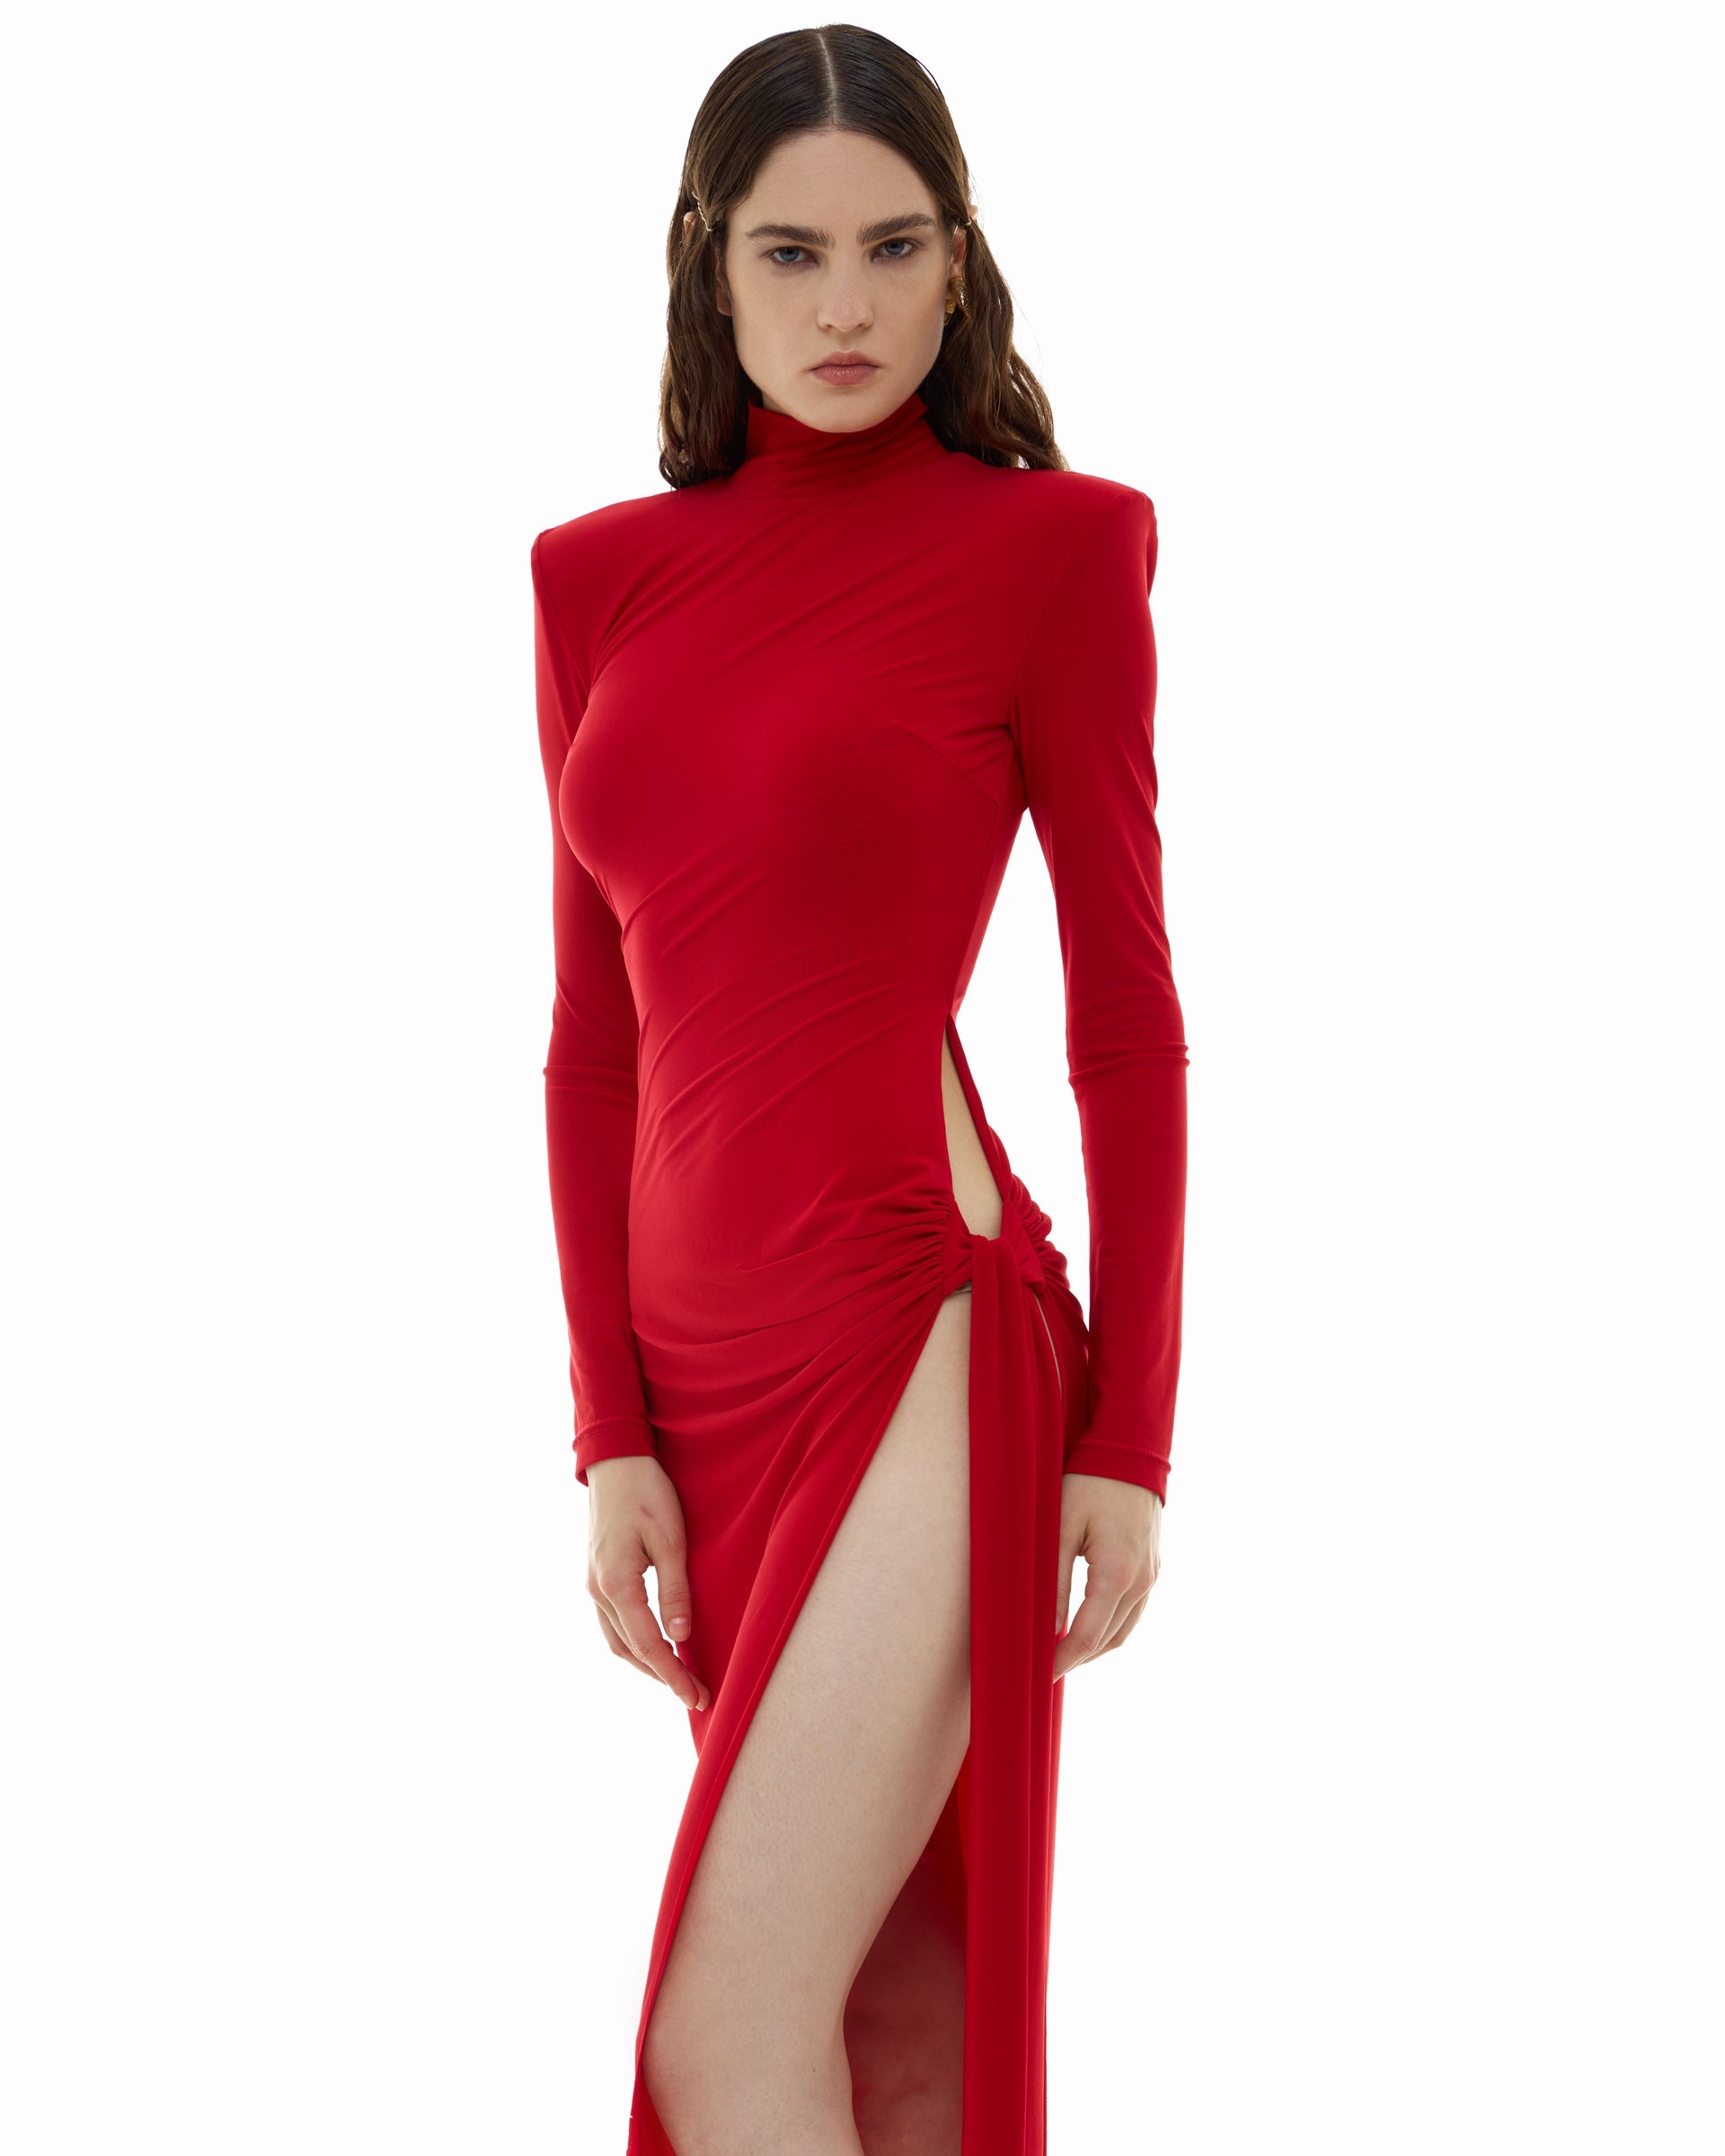 Charmer Dress Red